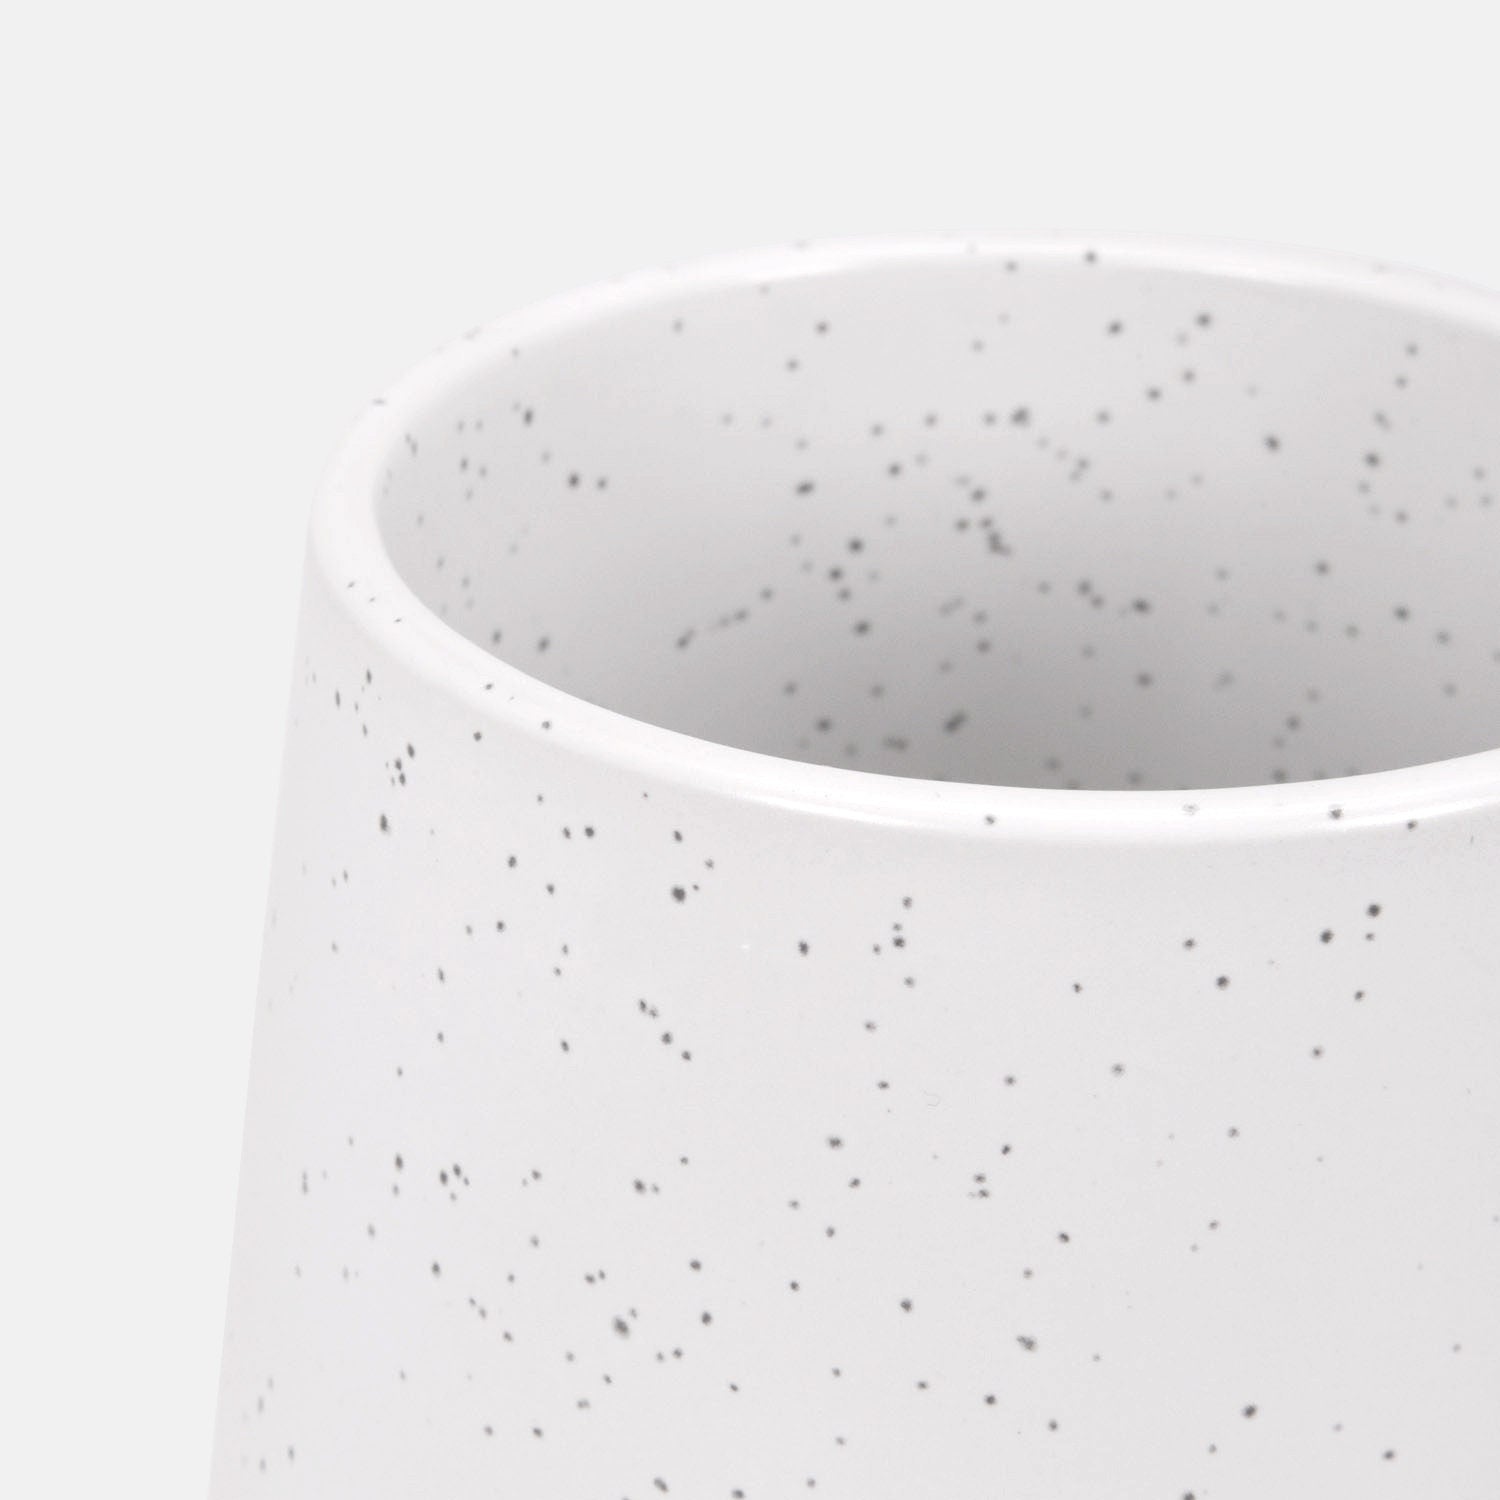 Speckled Ceramic Utensil Holder | Kitchenware